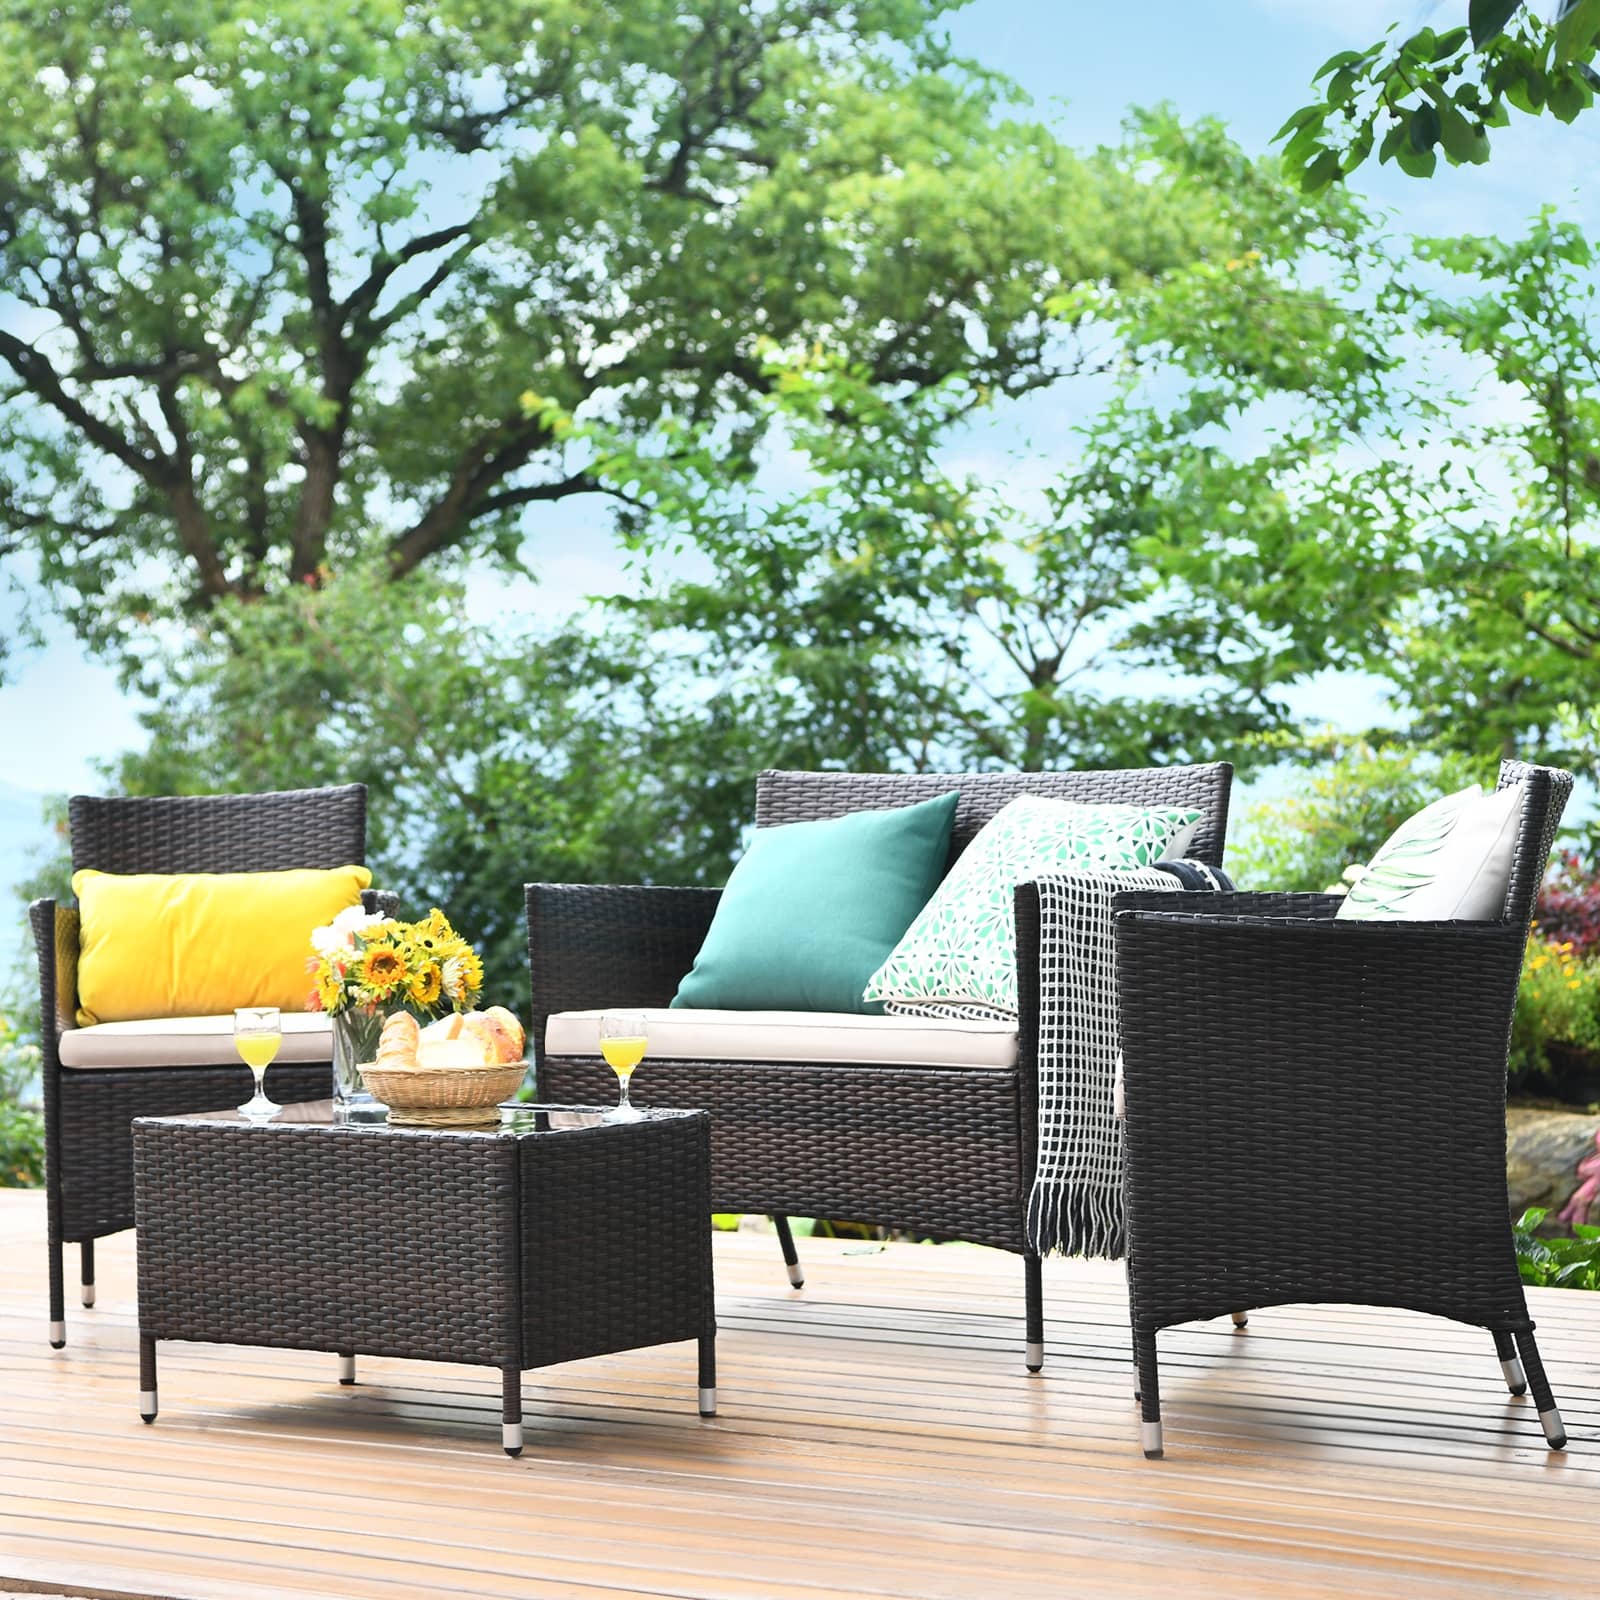 CASAINC 4 Pieces Rattan Sofa Set with Glass Table and Comfortable Wicker for Outdoor Patio-Casainc Canada